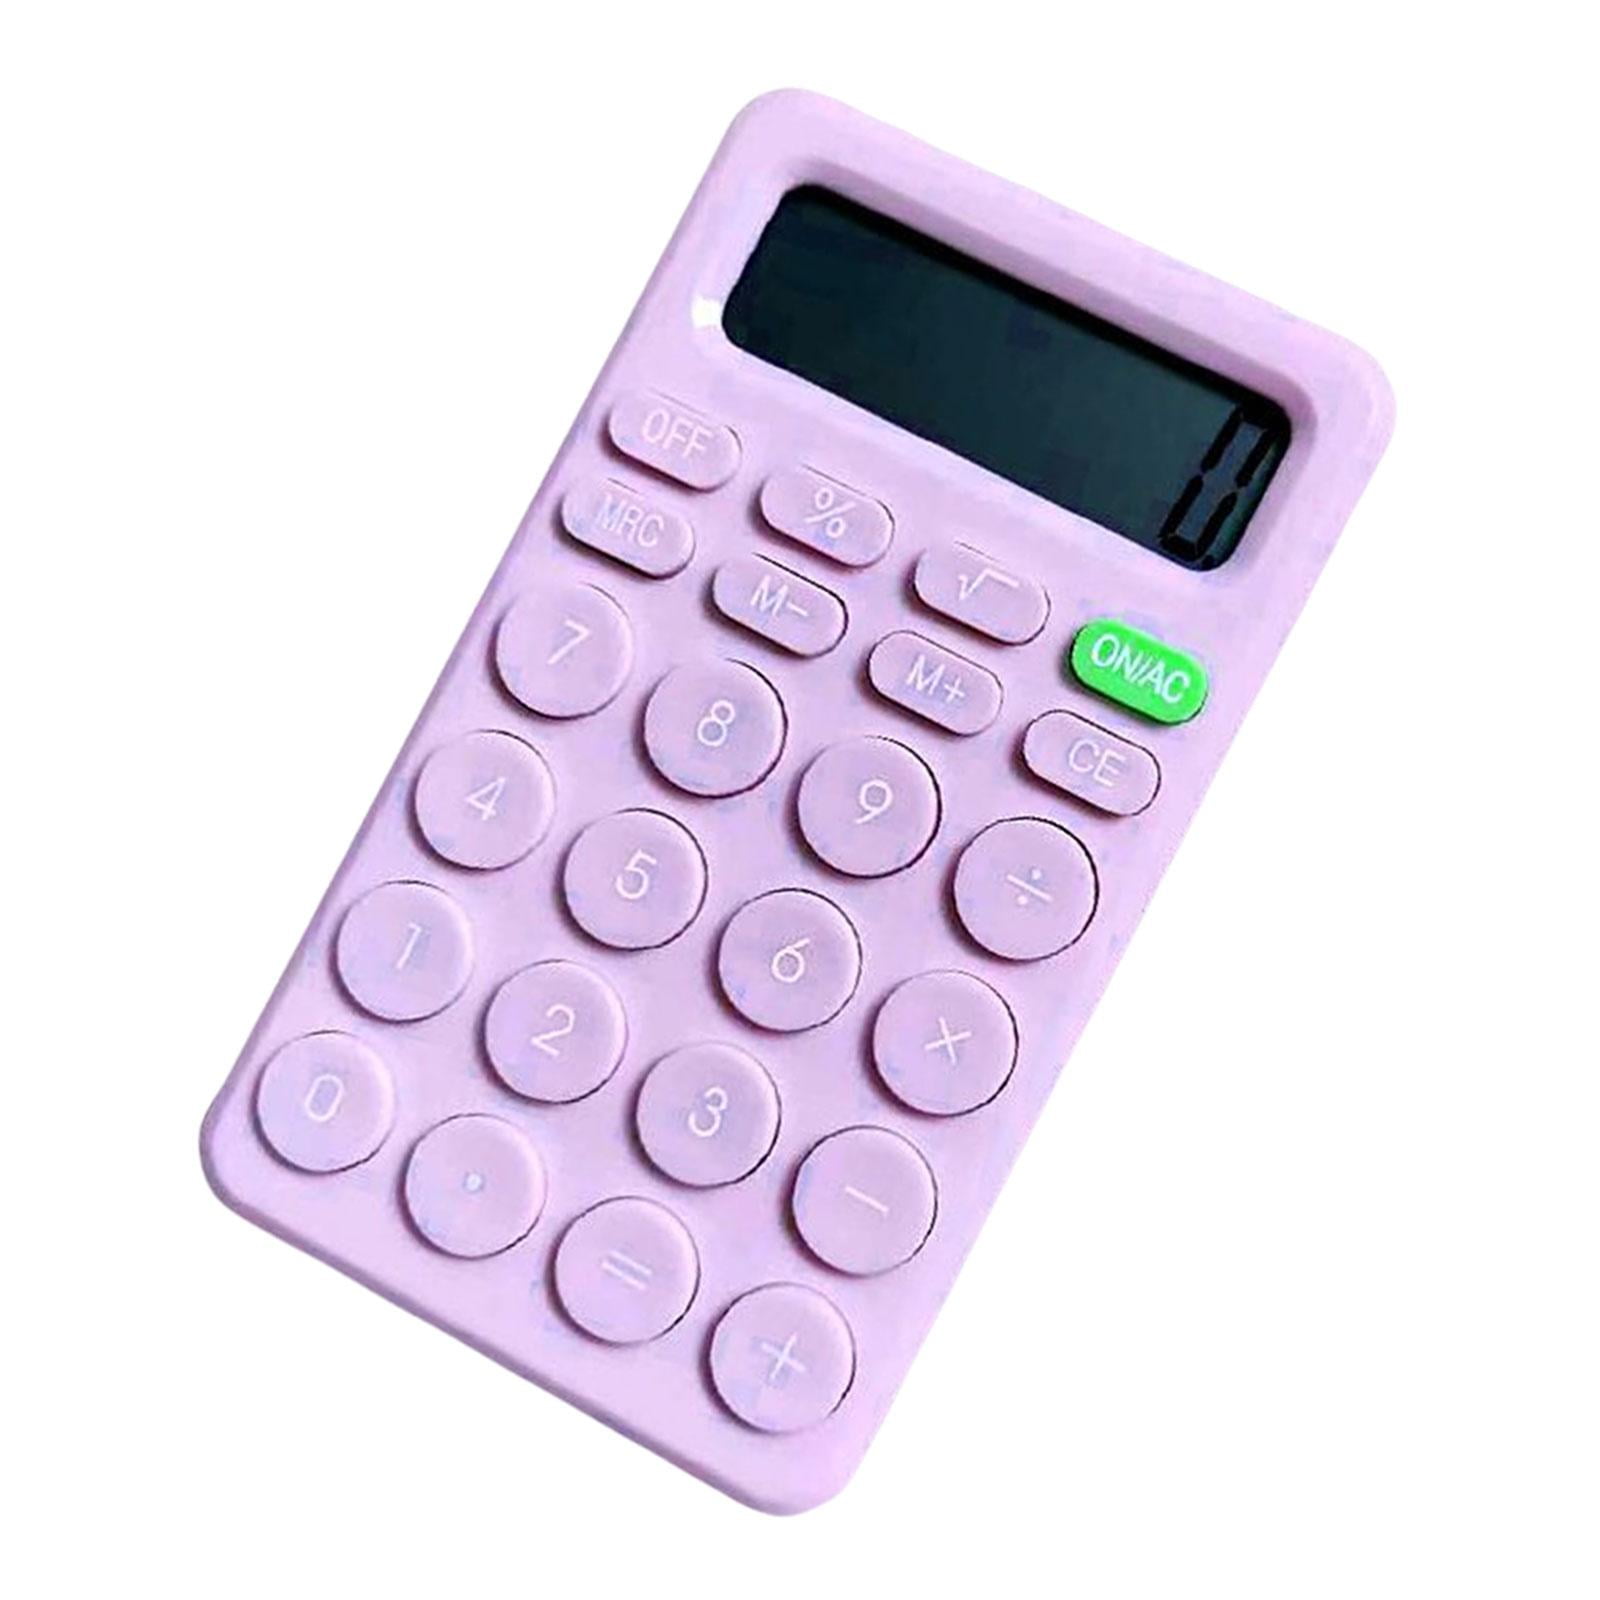 Basic Calculator, Desk Calculator, 8 Digit Digital Lightweight